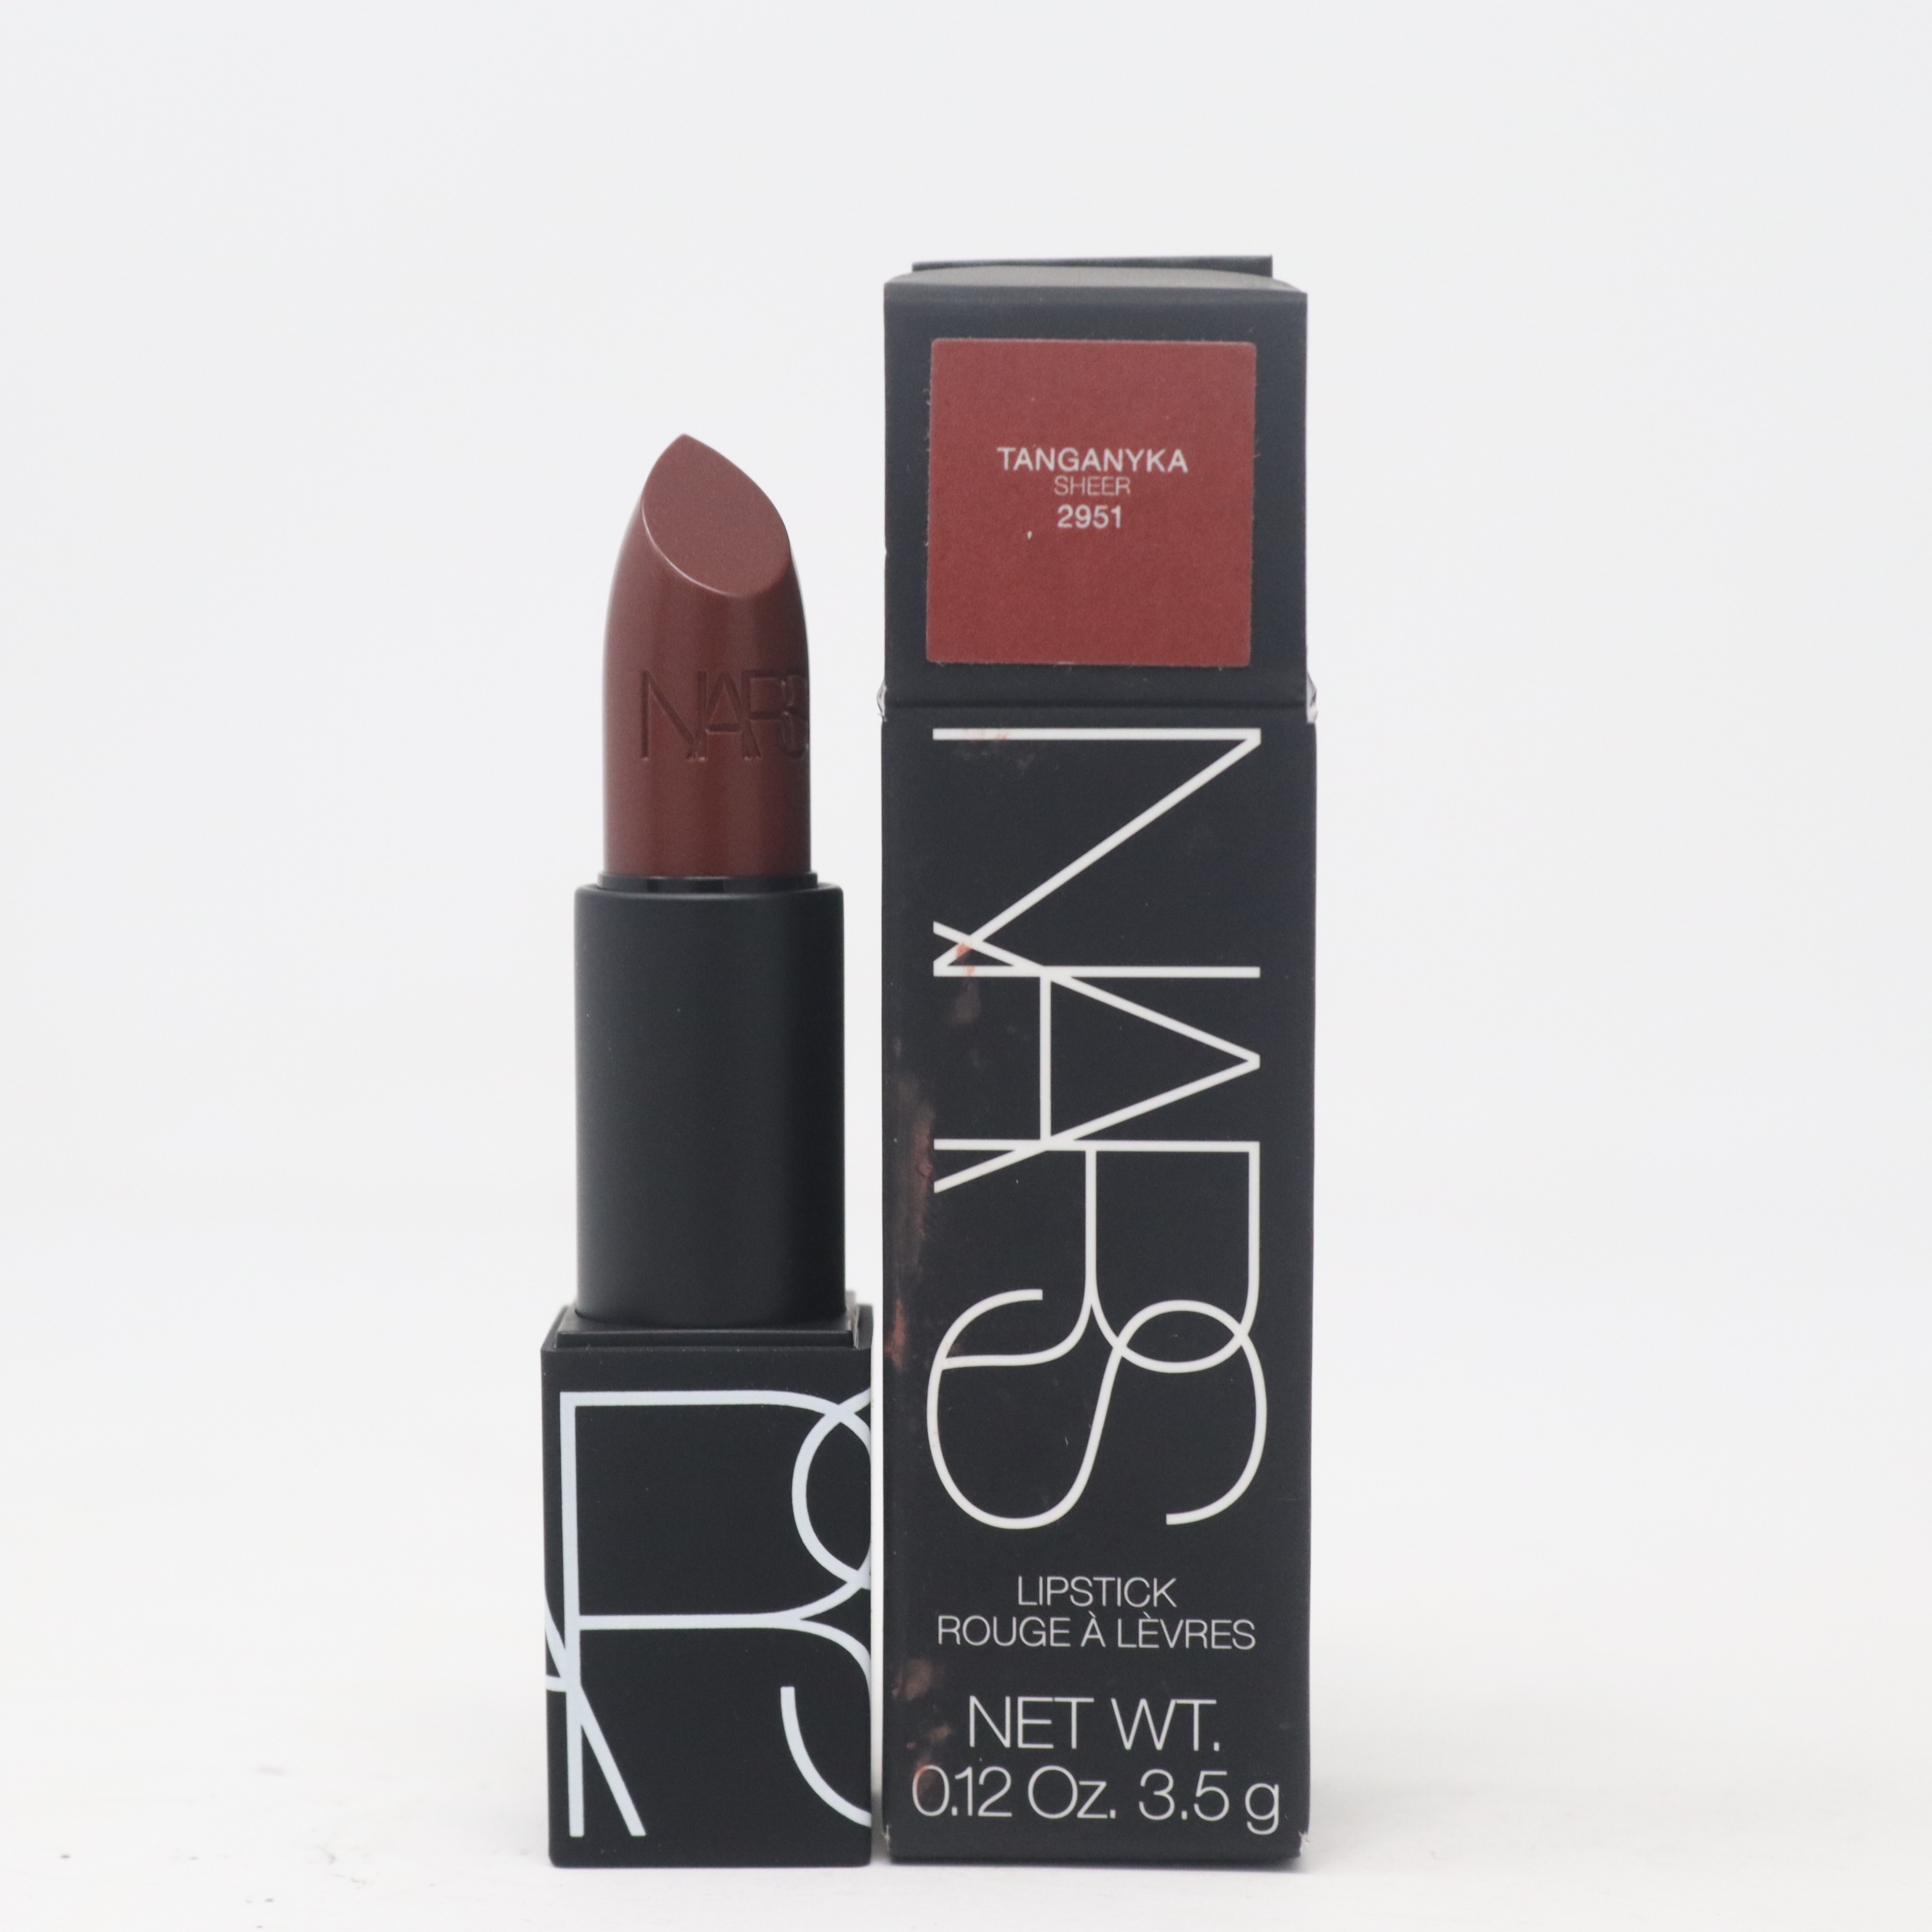 NARS Sheer Lipstick Full Size 0.12 Oz - License to Love 2954 for